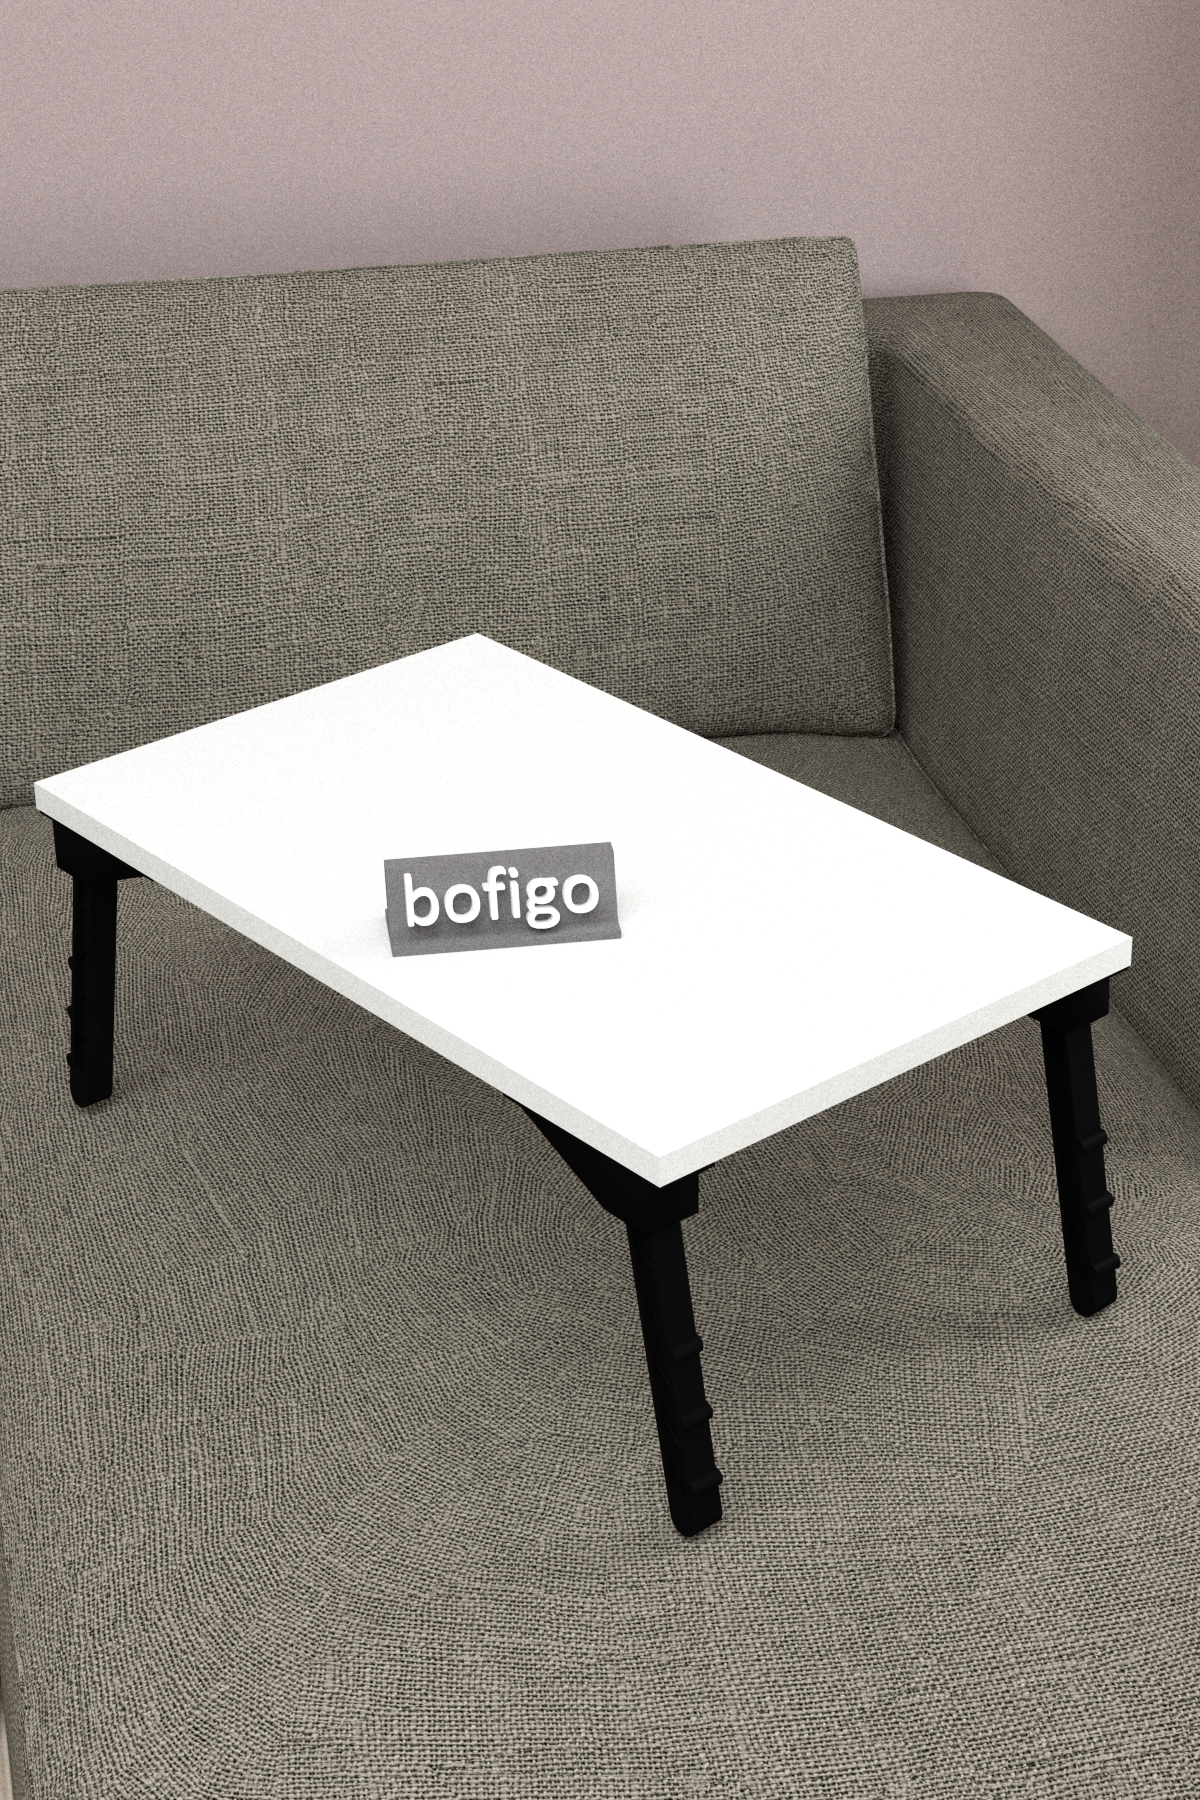 Bofigo Laptop Table Breakfast Table Study Table White